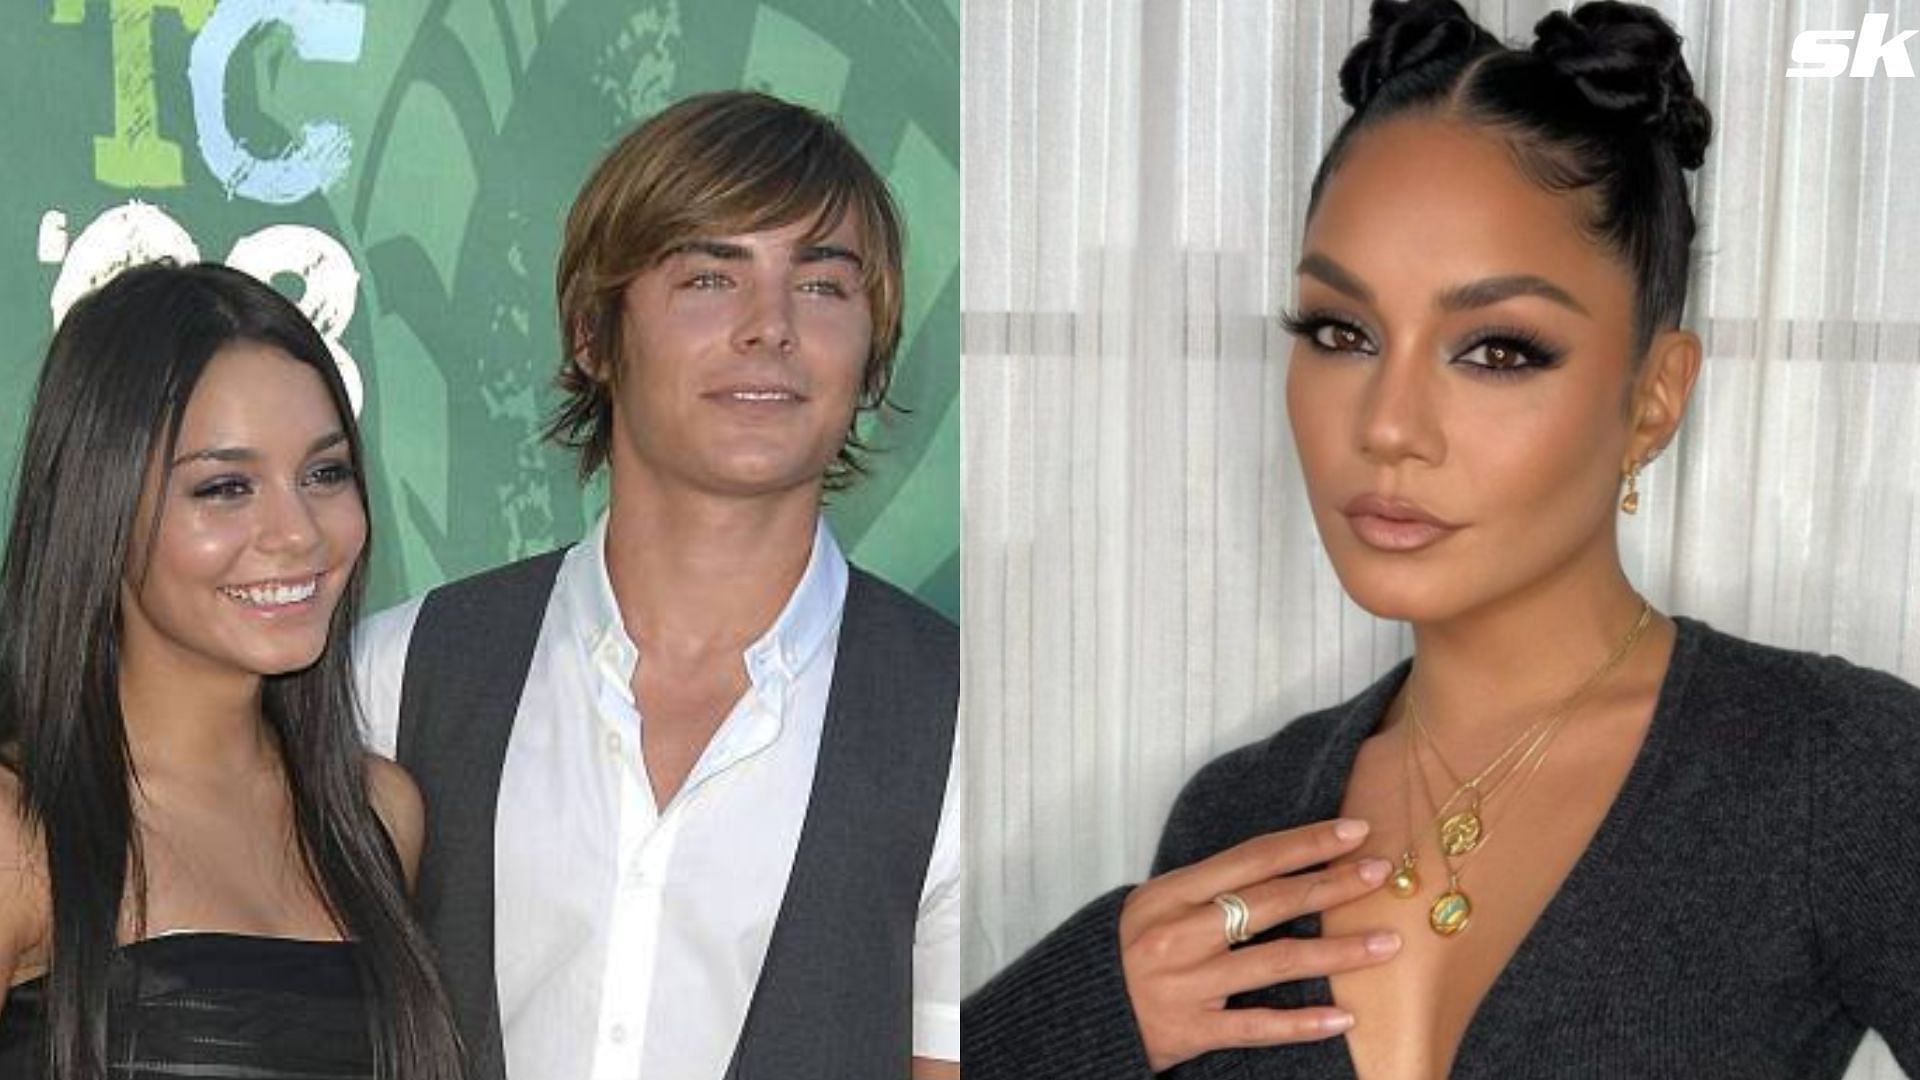 High School Musical creator spills the tea about why Vanessa Hudgens &amp; Zac Efron S4 reunion got shelved